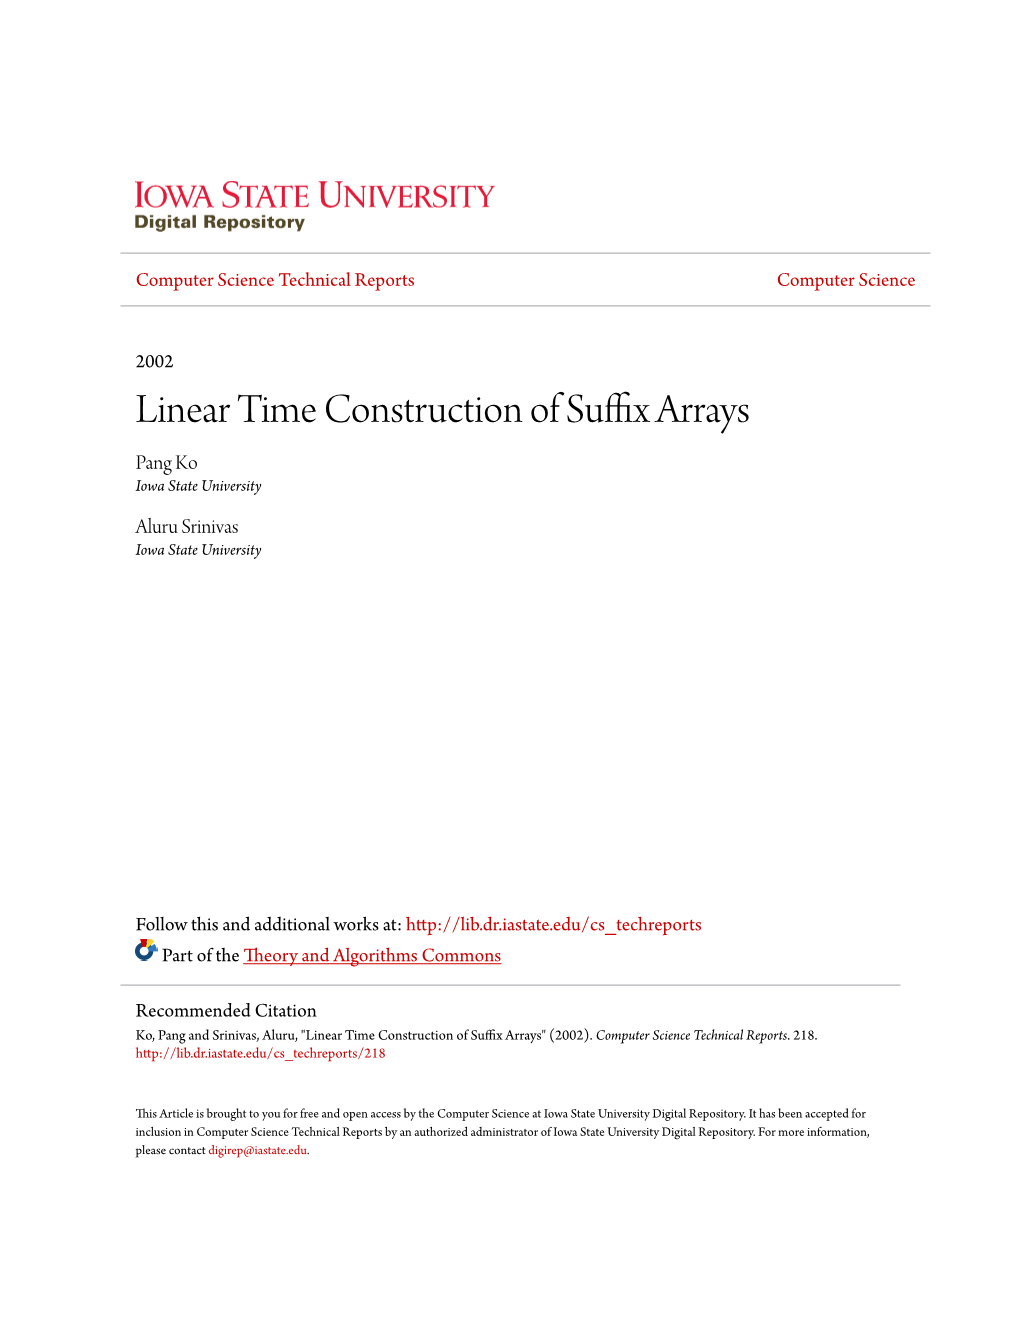 Linear Time Construction of Suffix Arrays Pang Ko Iowa State University